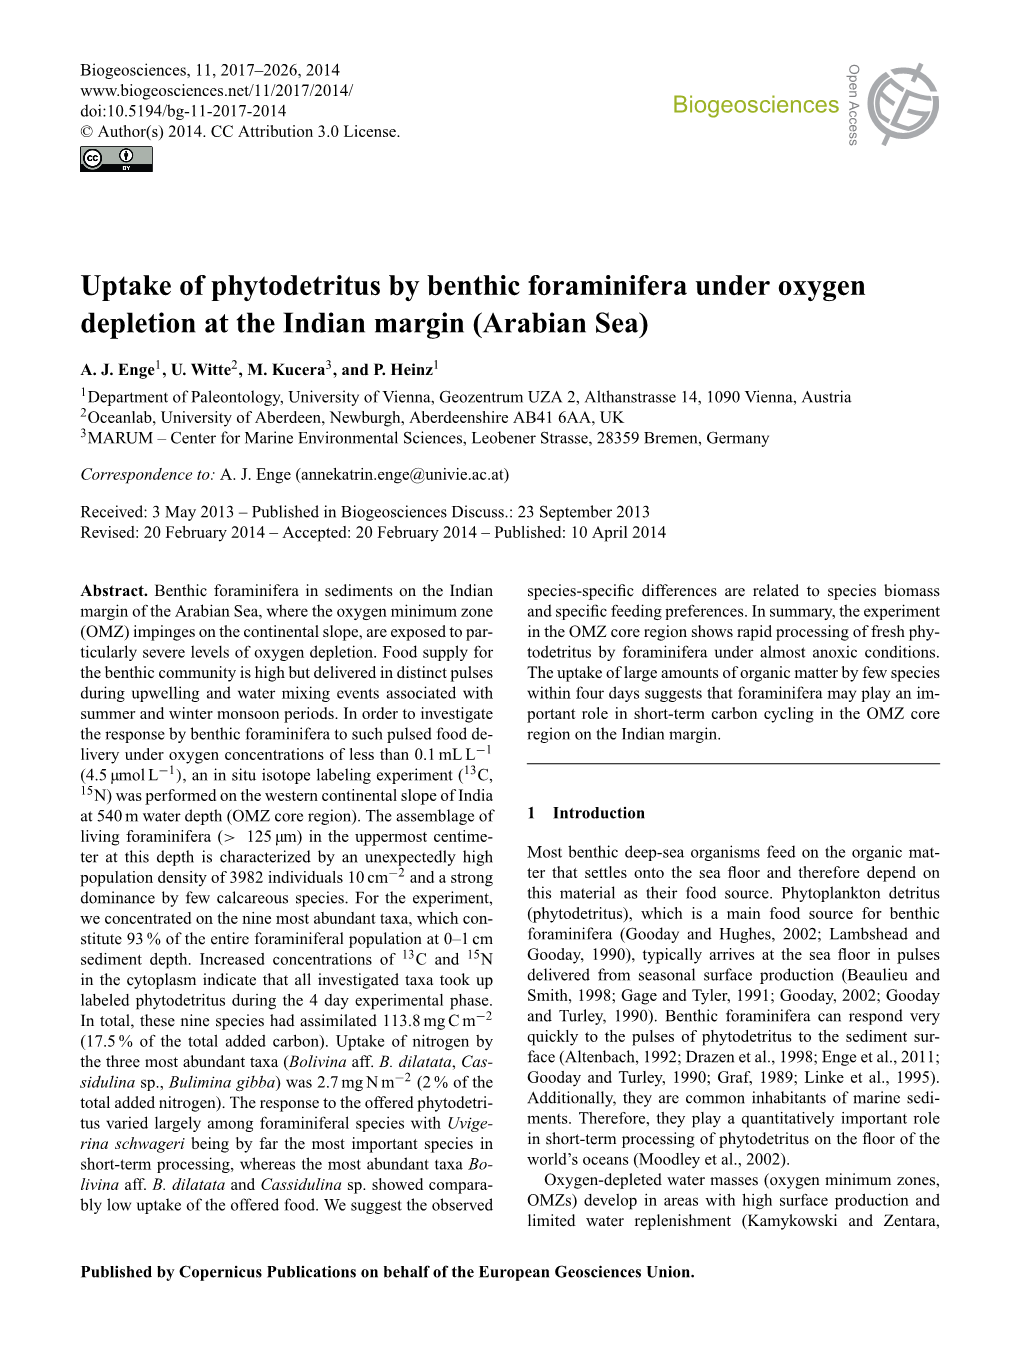 Uptake of Phytodetritus by Benthic Foraminifera Under Oxygen Depletion at the Indian Margin (Arabian Sea)